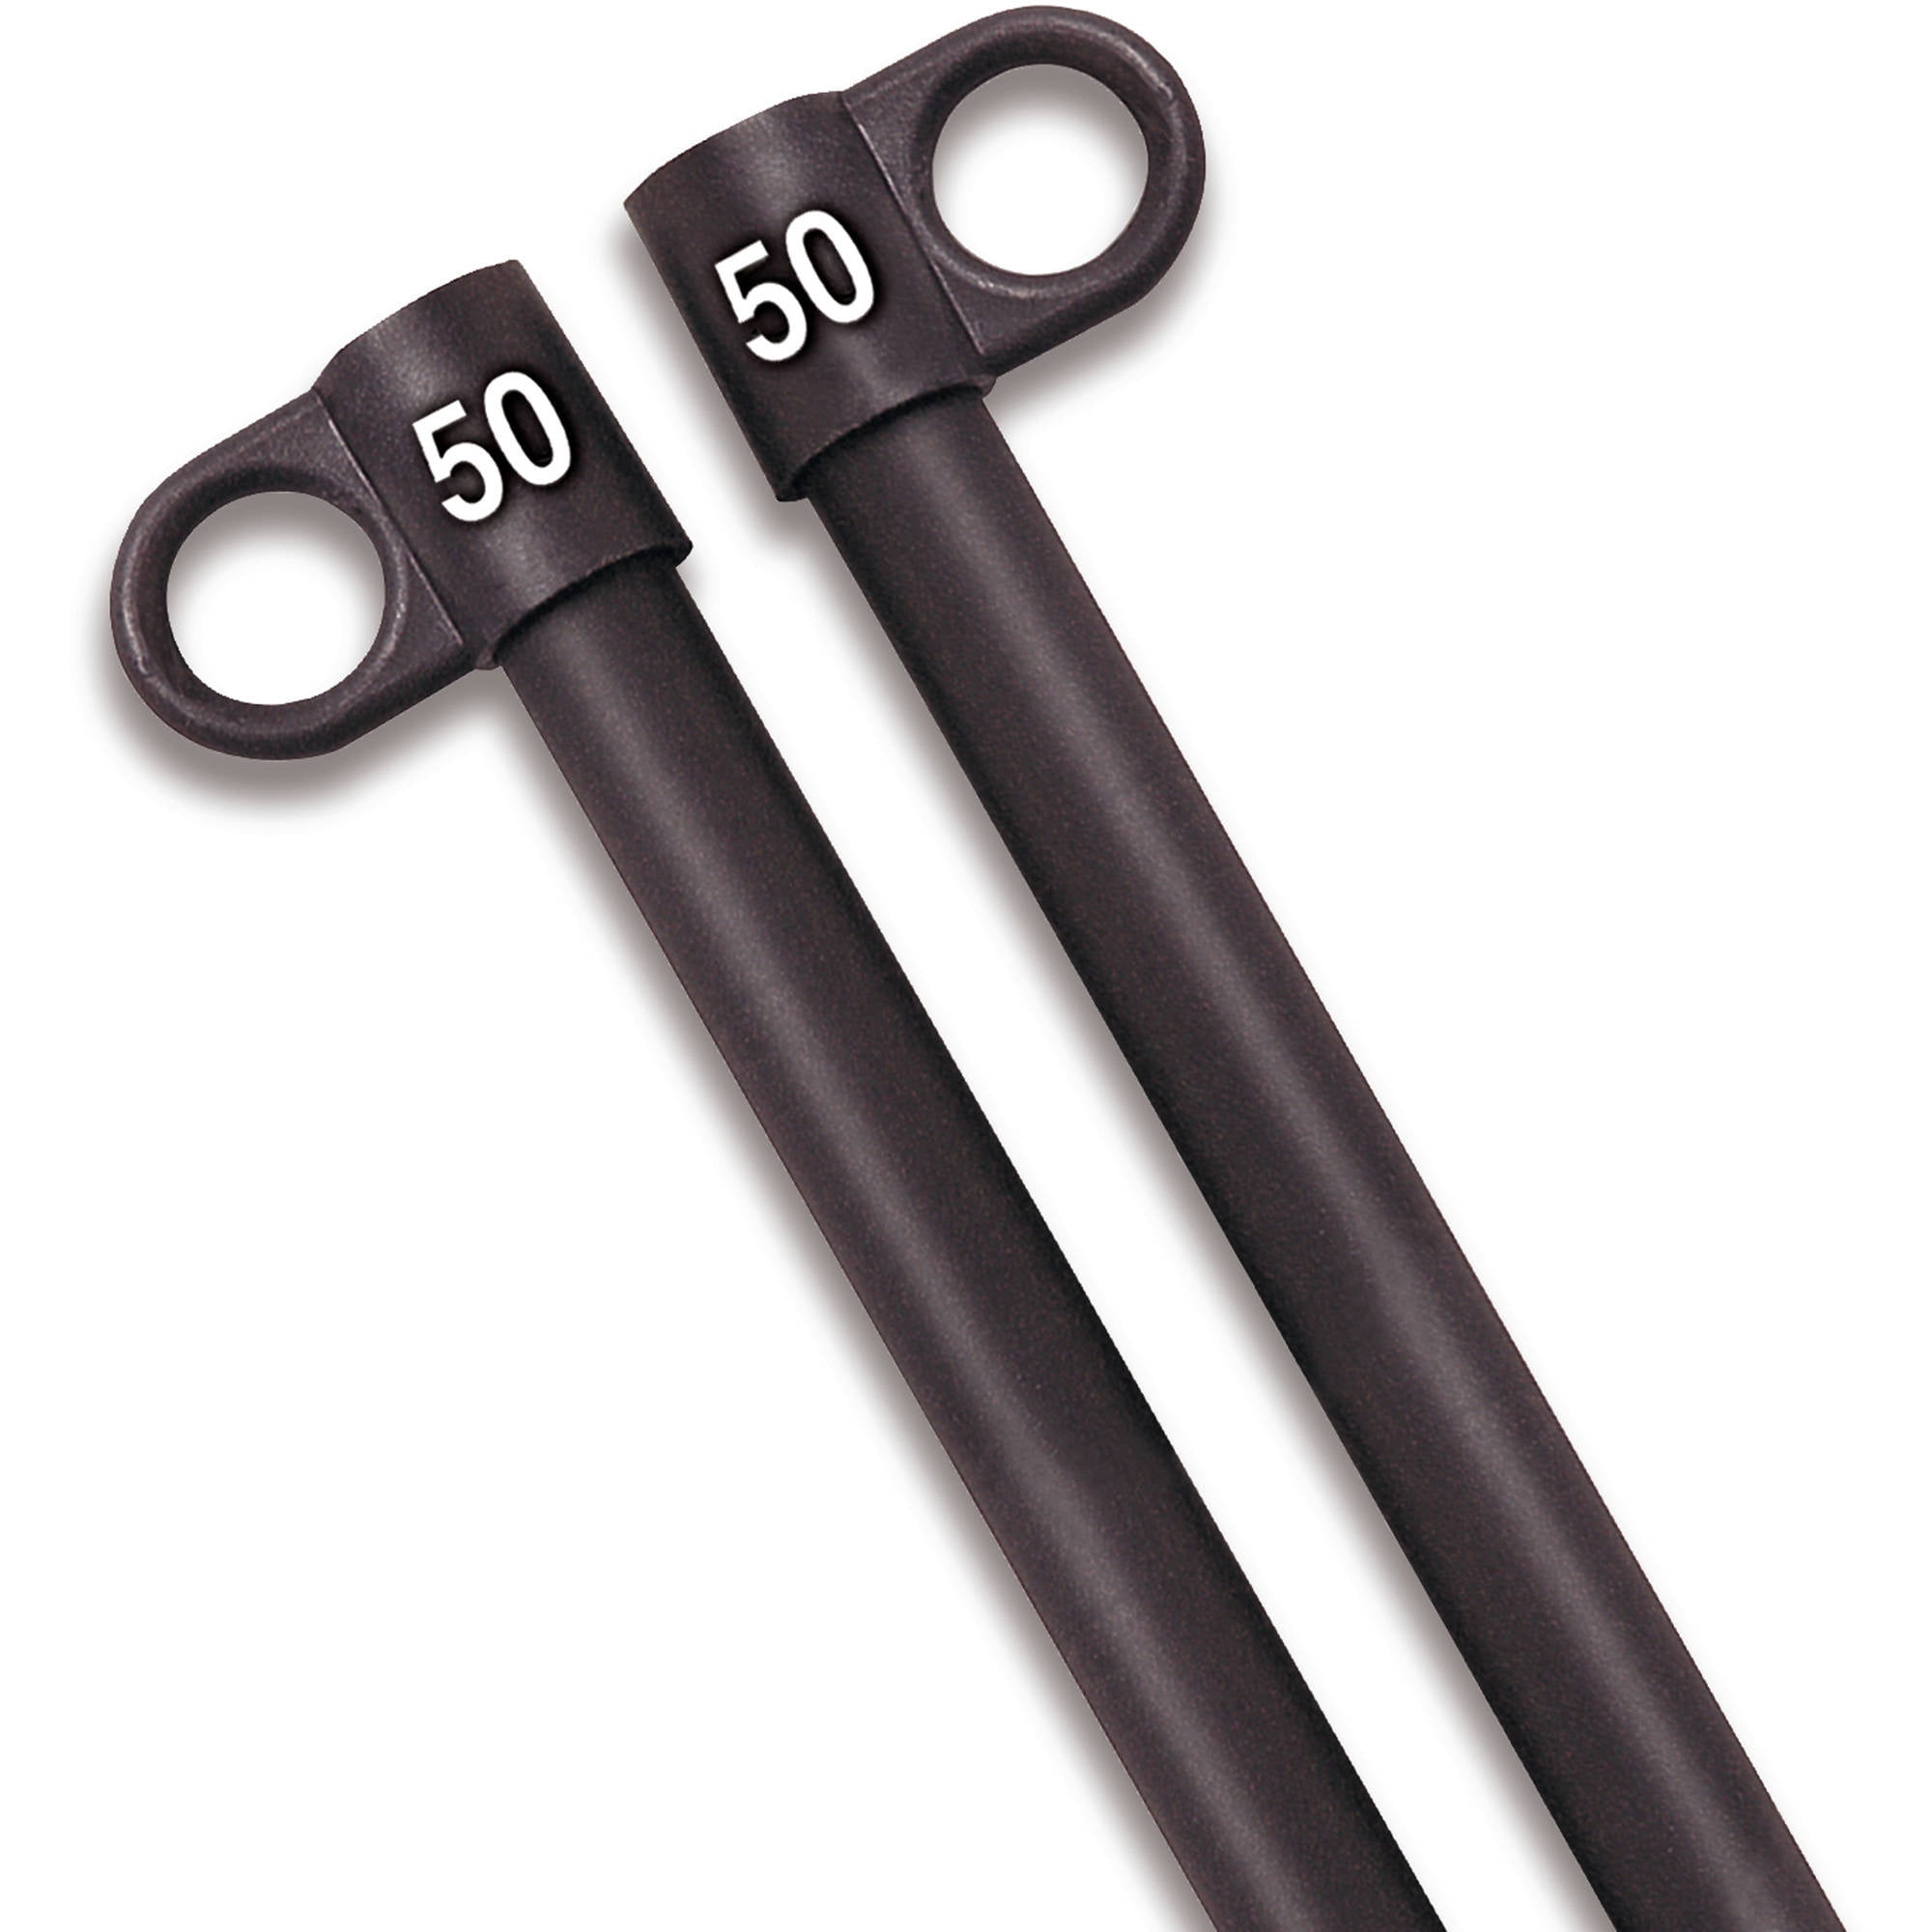 New 6 inch Lat/Squat Bar straps  1 pair Official Bowflex replacement parts 